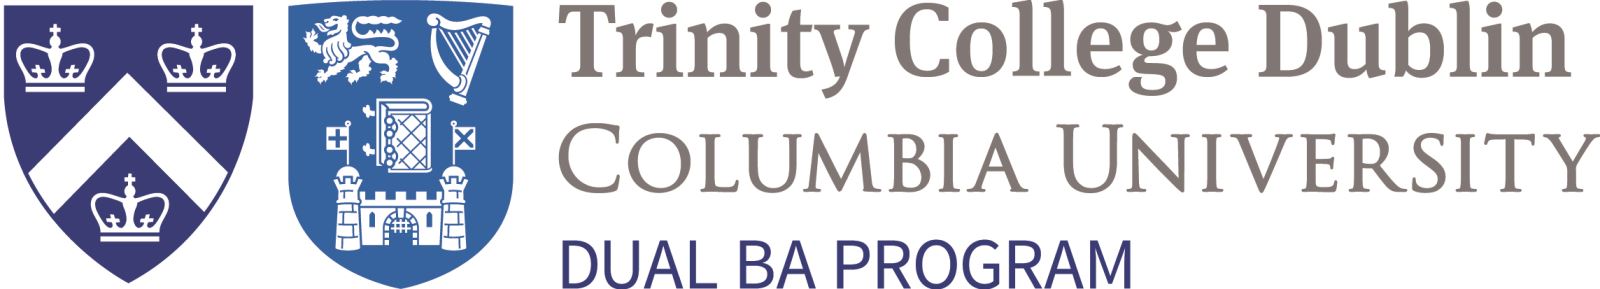 Dual BA Program between Trinity College Dublin and Columbia University